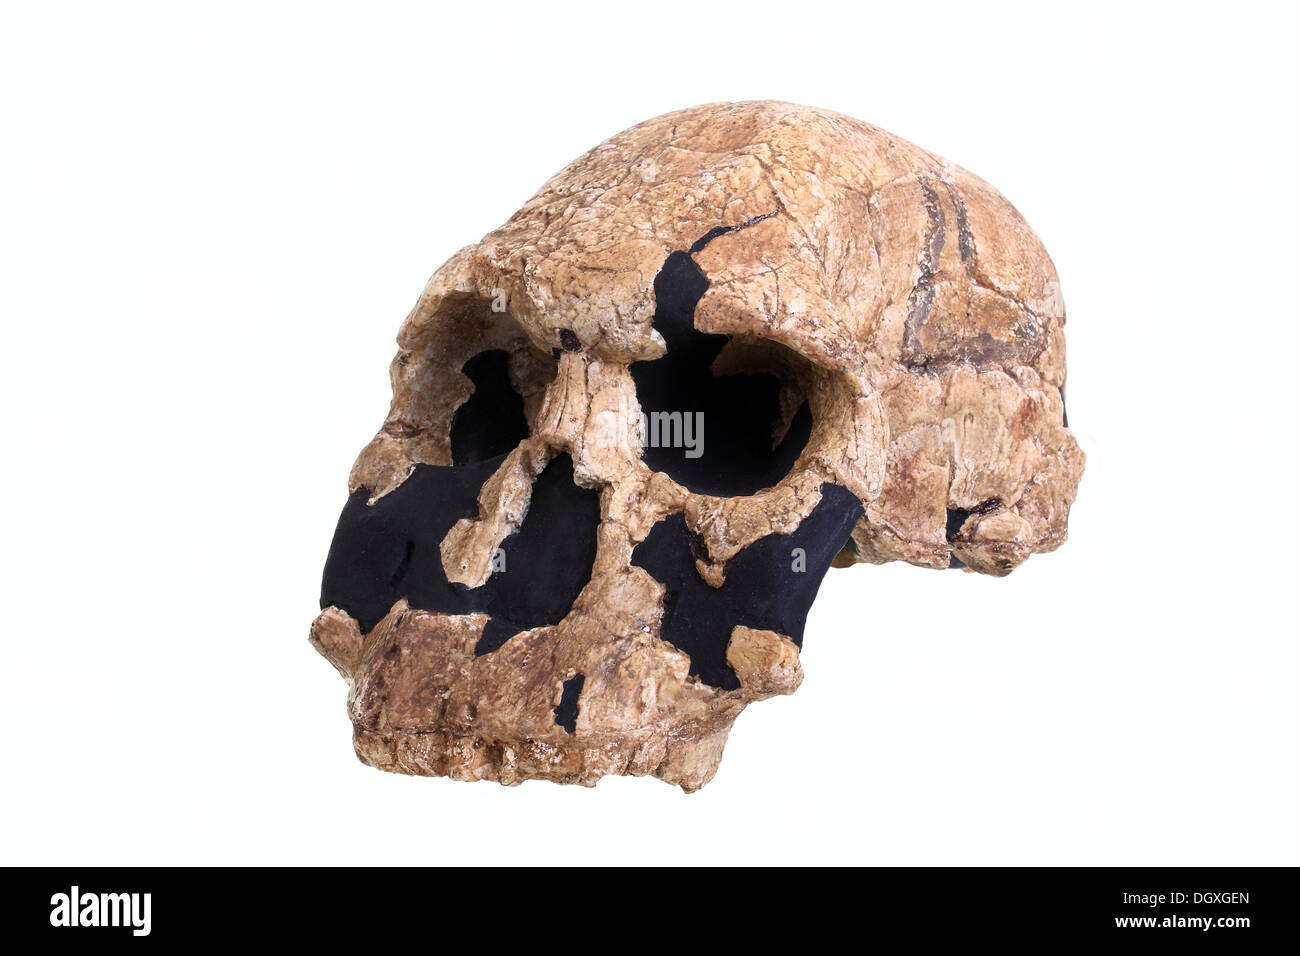 Replica skull of Homo habilis, evolution of human species Stock Photo